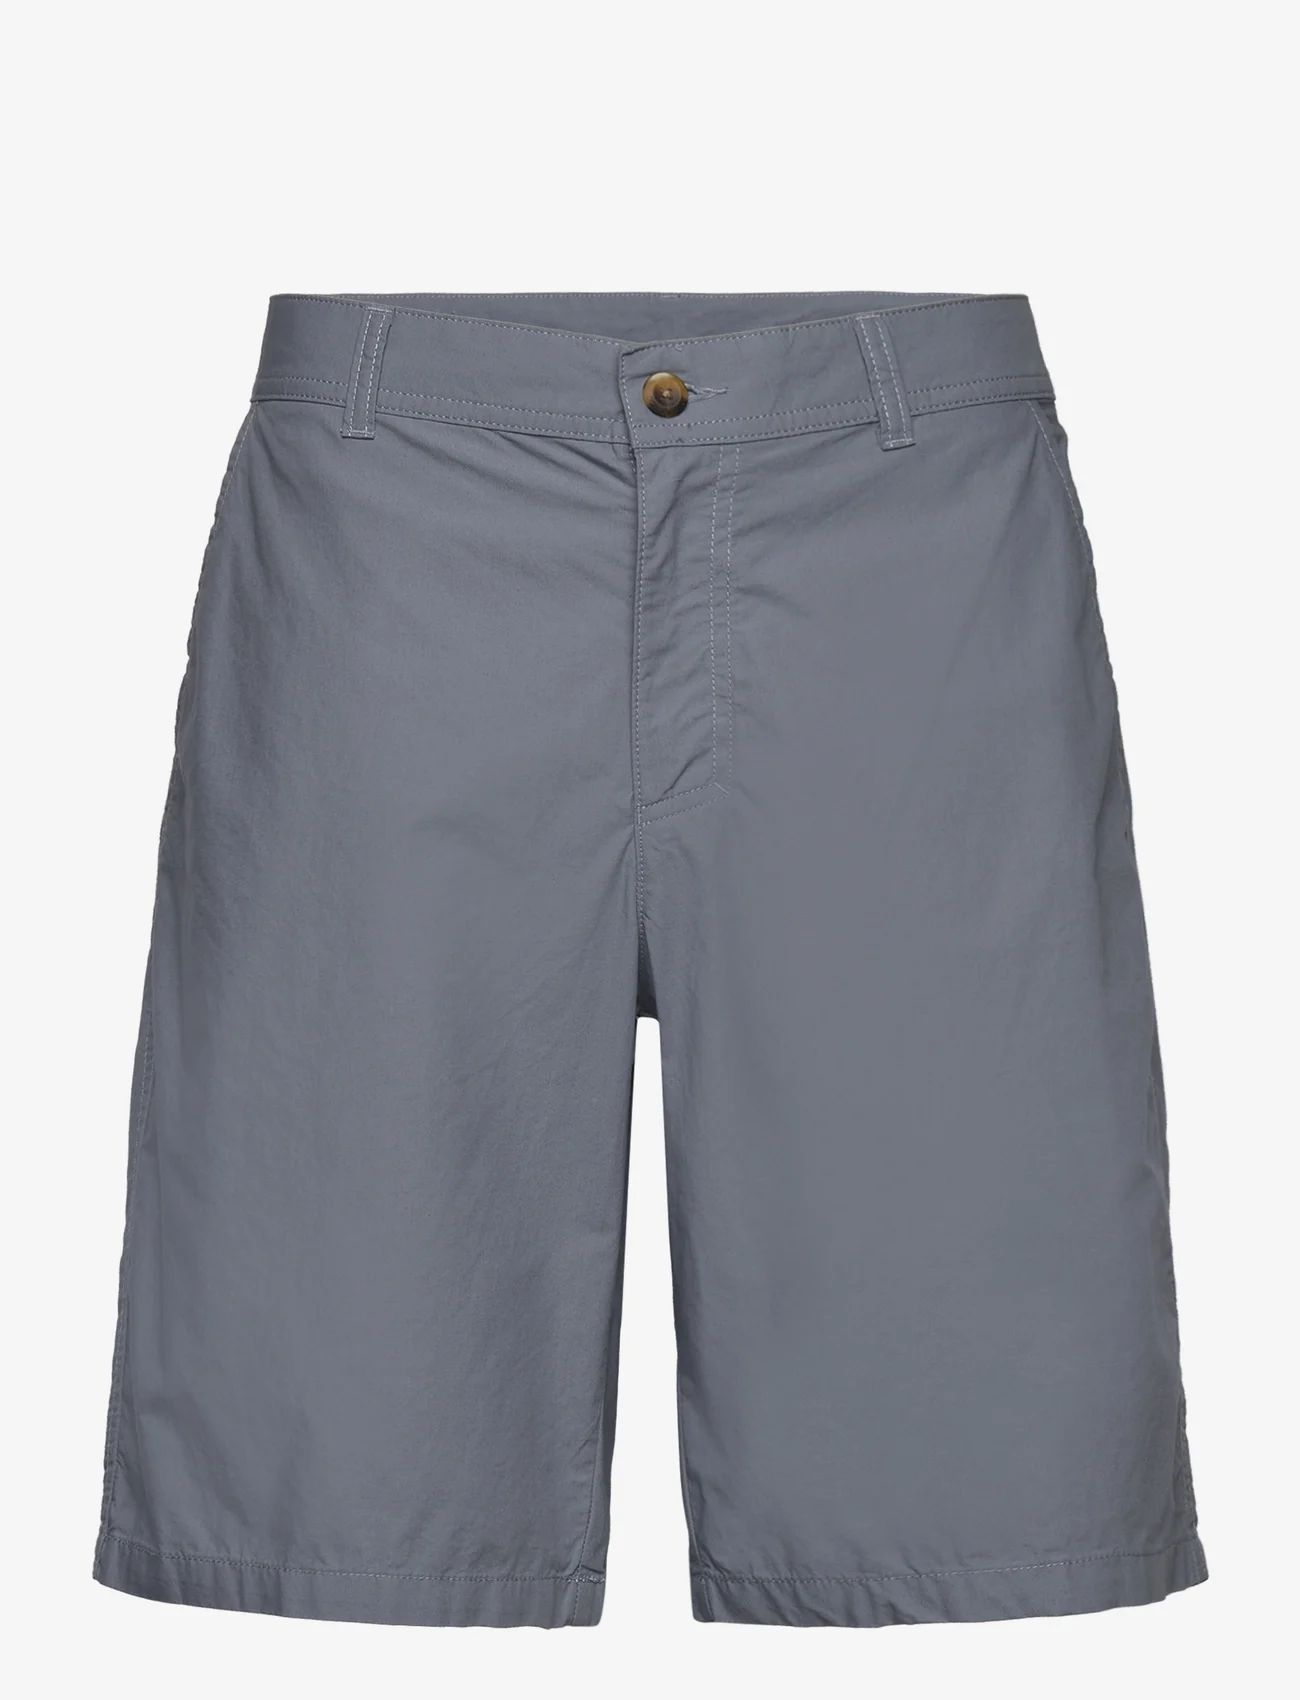 Columbia Sportswear - Washed Out Short - udendørsshorts - grey ash - 0